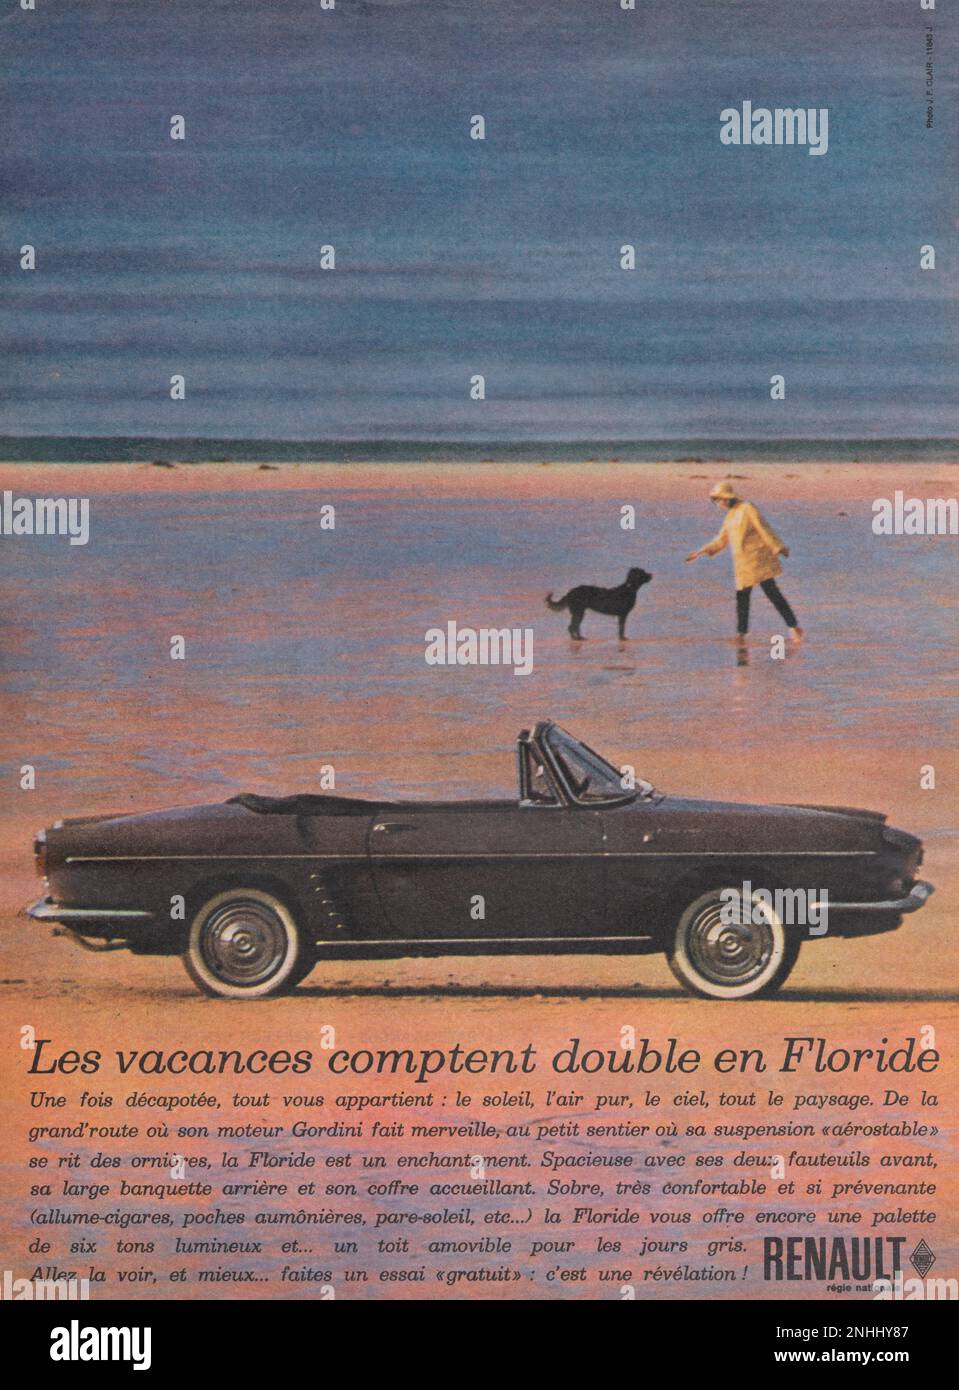 Renault Florida French vintage magazine advertisement Renault Florida advert 1960s Stock Photo